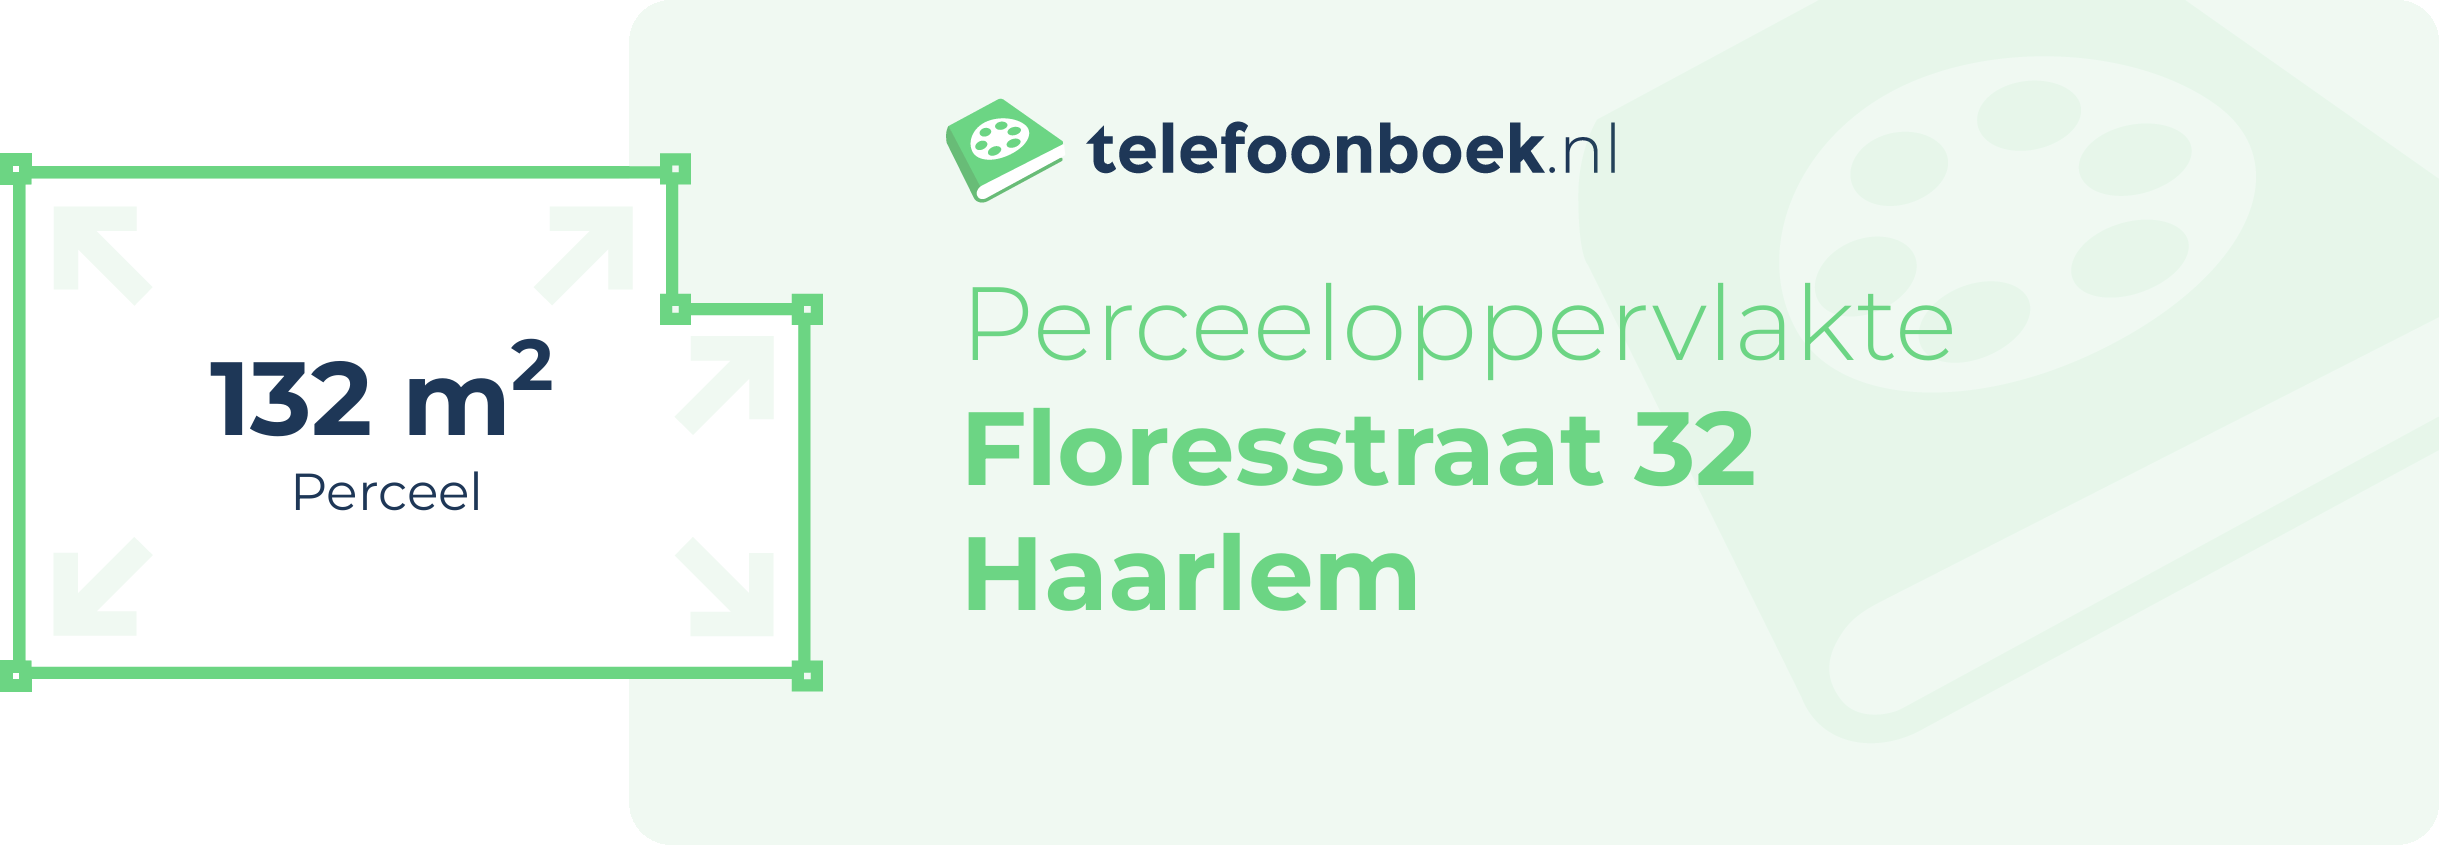 Perceeloppervlakte Floresstraat 32 Haarlem